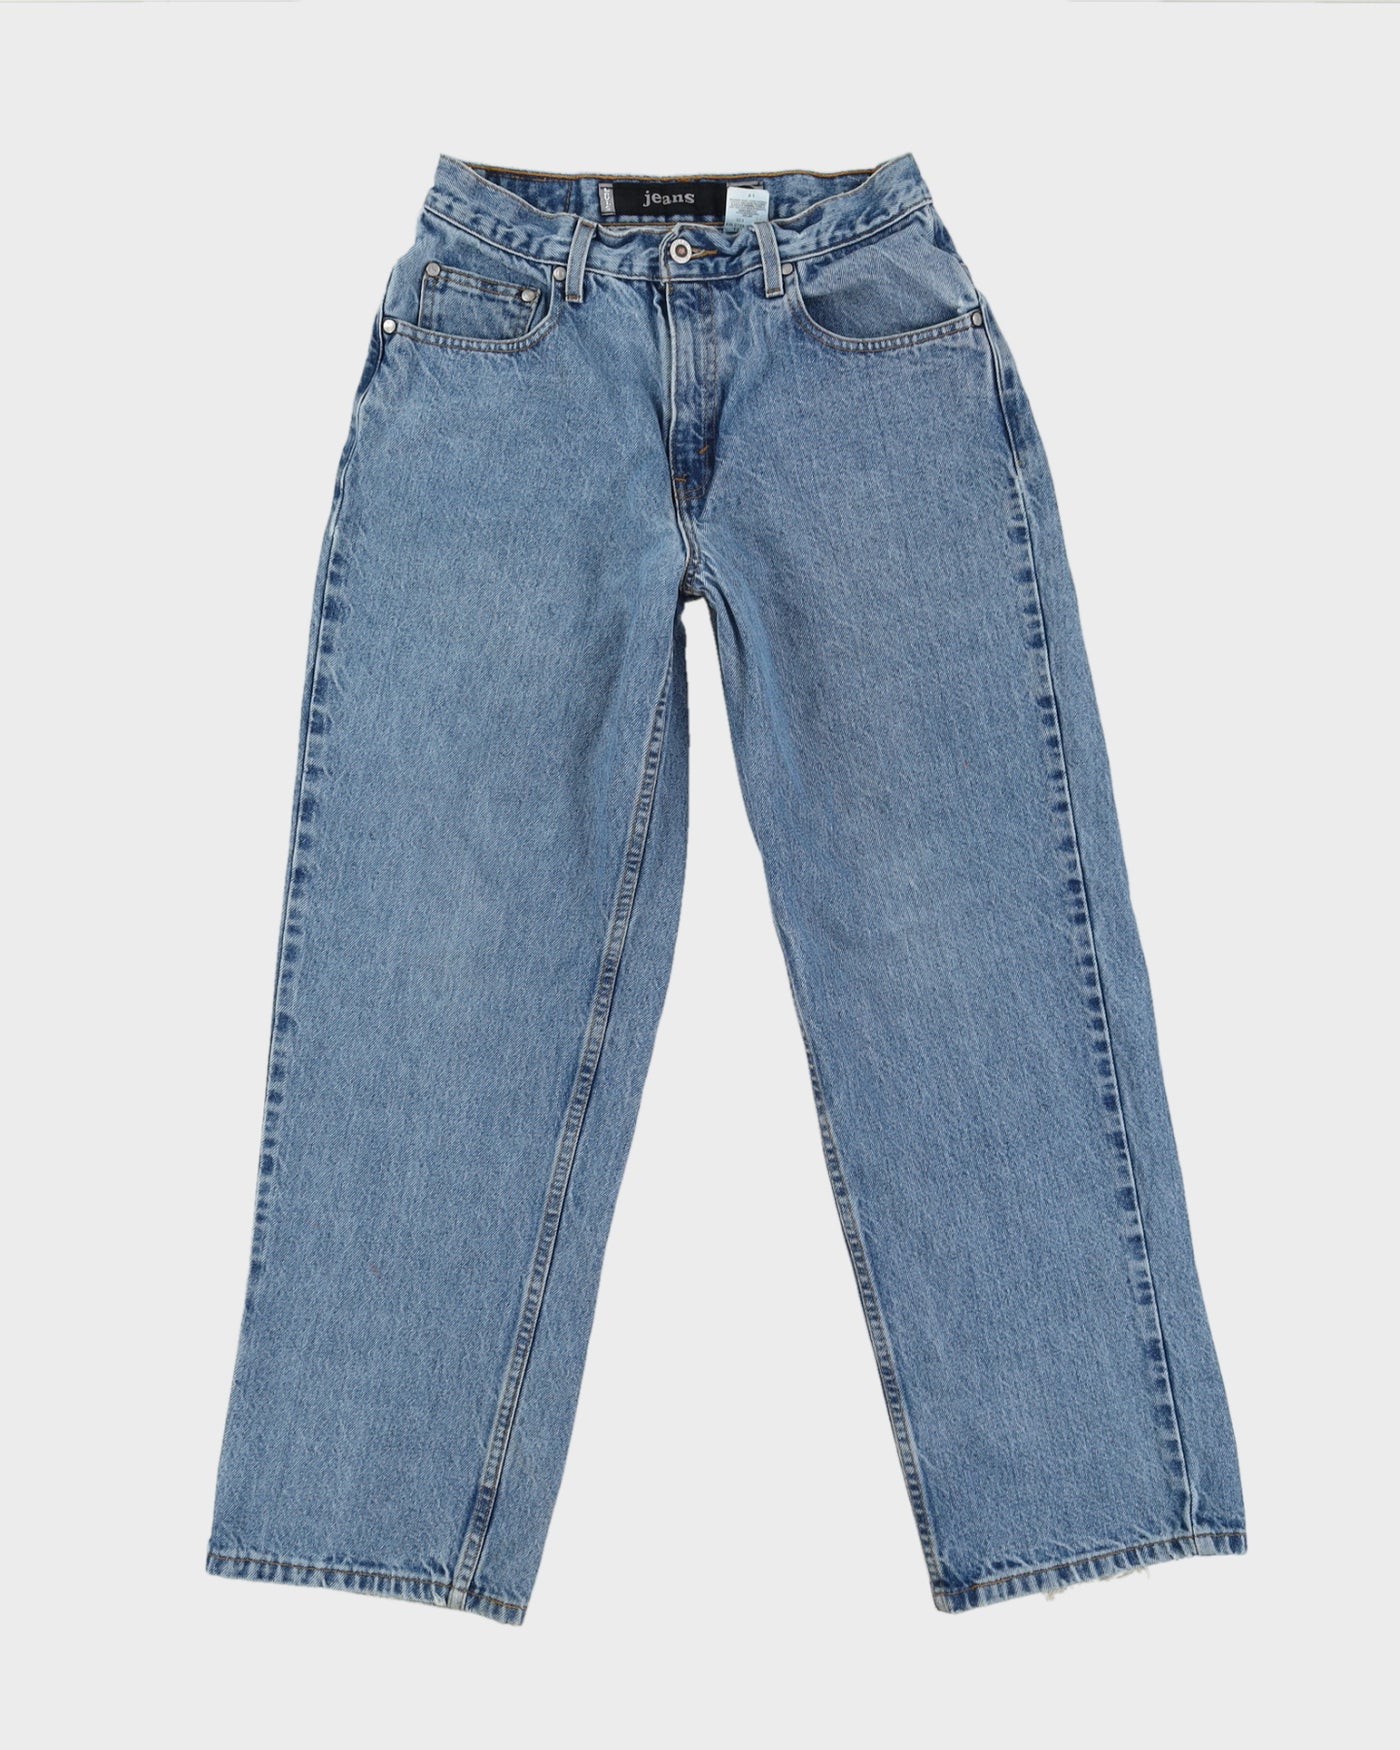 Vintage 80s Levi's SilverTab Blue Light Washed Jeans - W29 L31